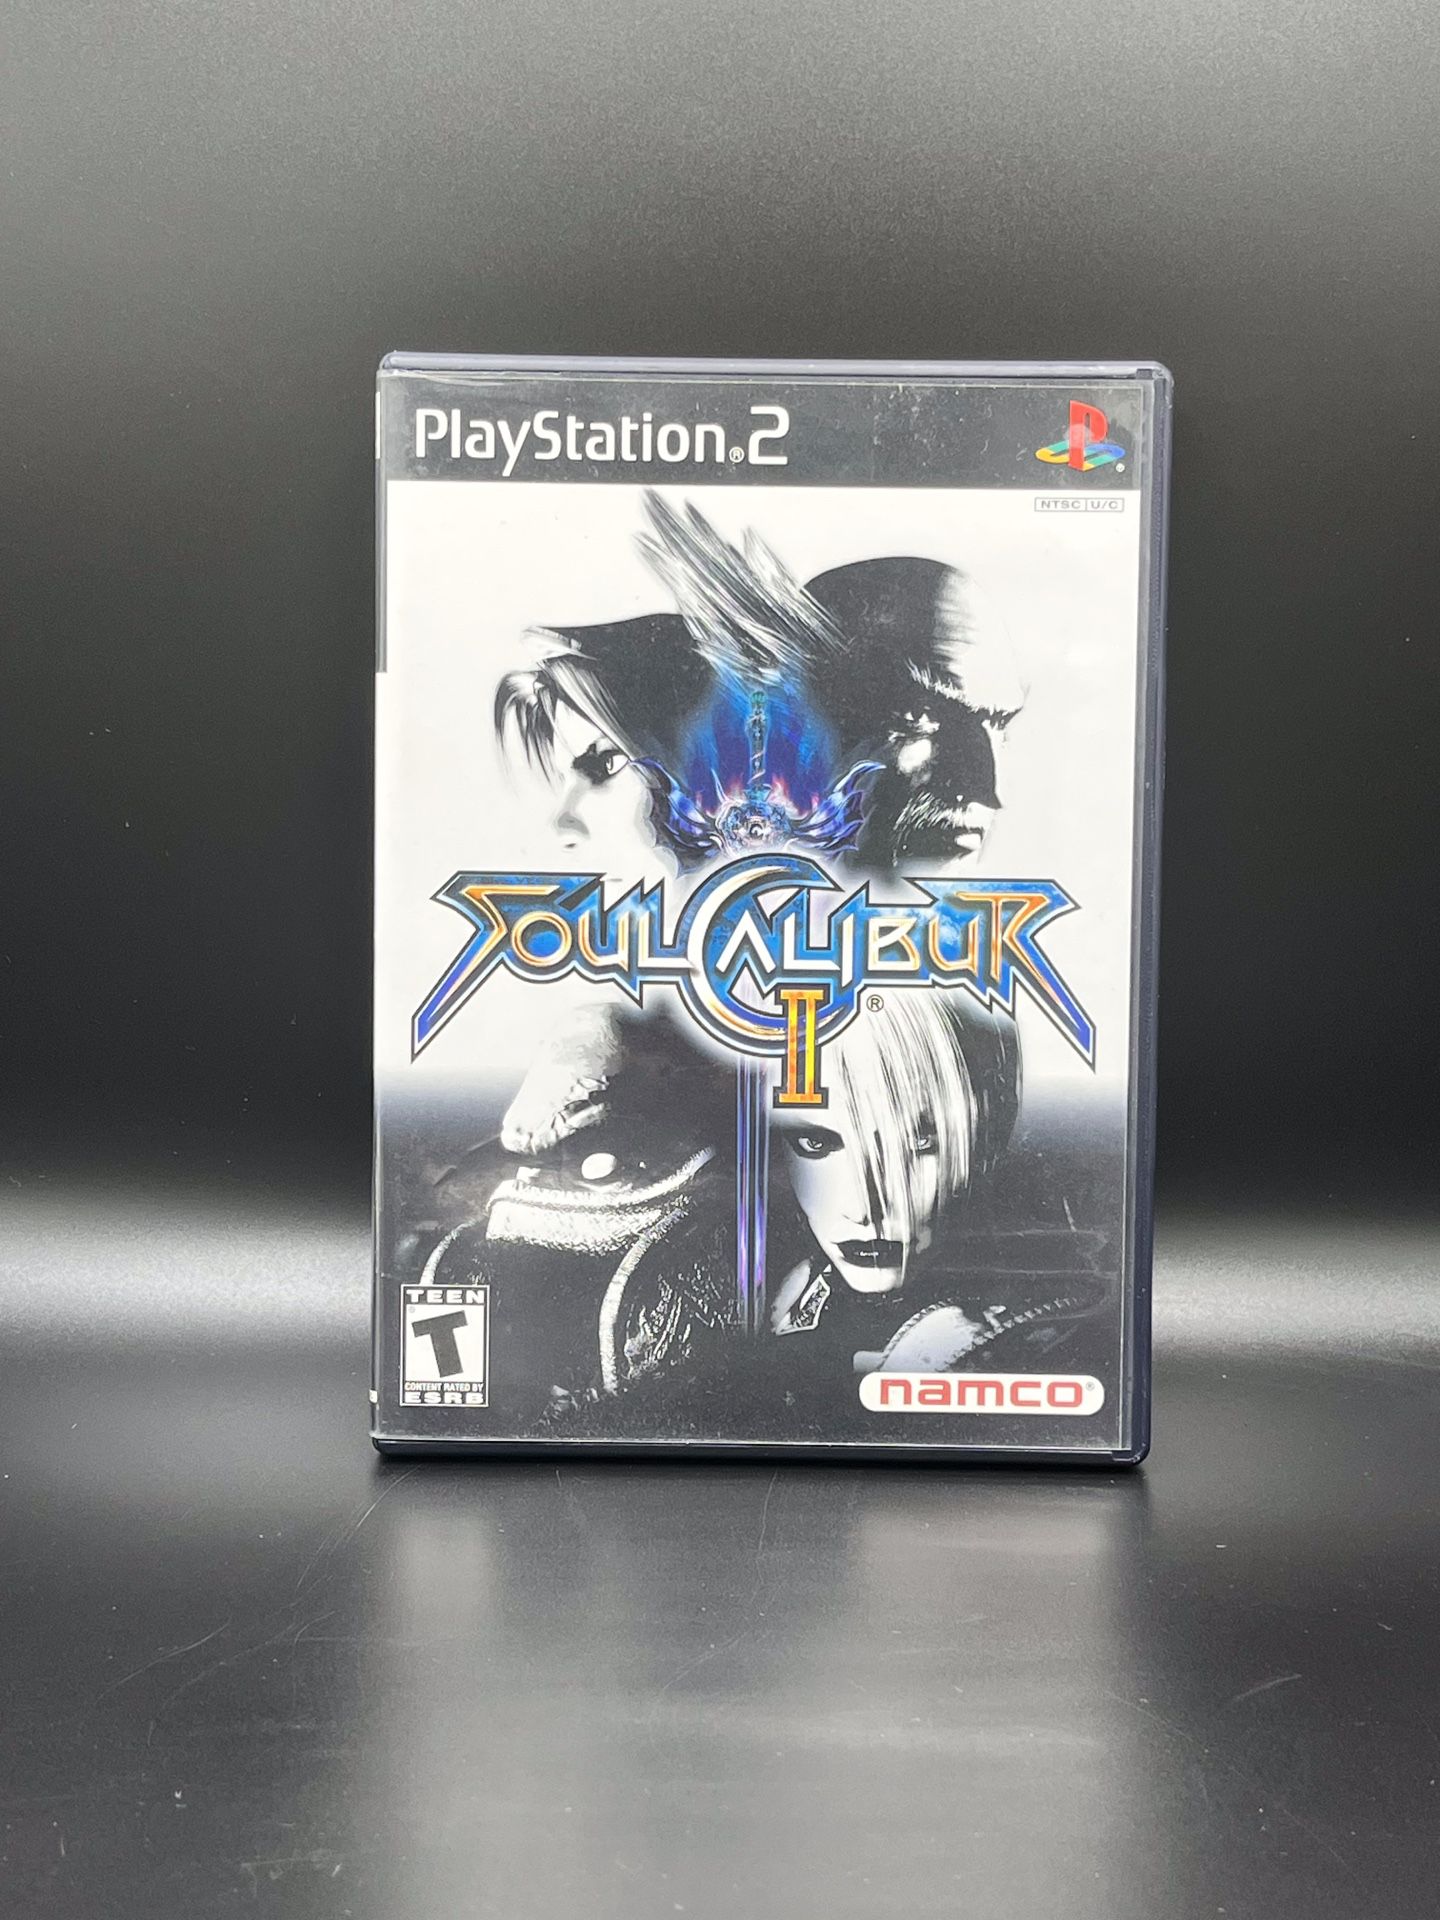 Soul Calibur II (PS2)